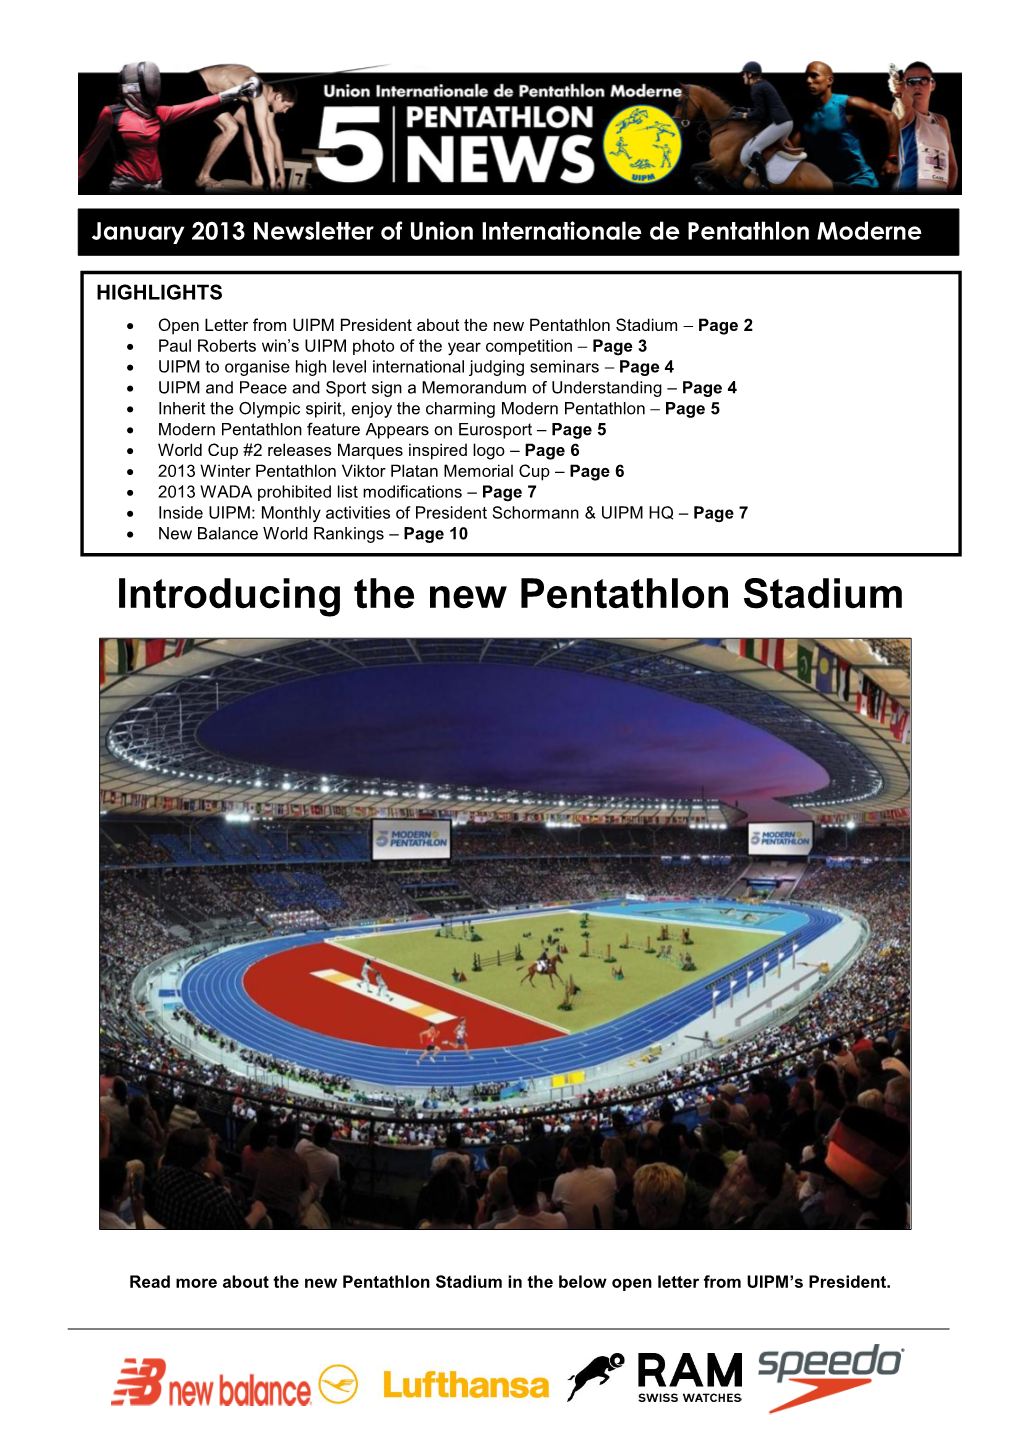 Introducing the New Pentathlon Stadium